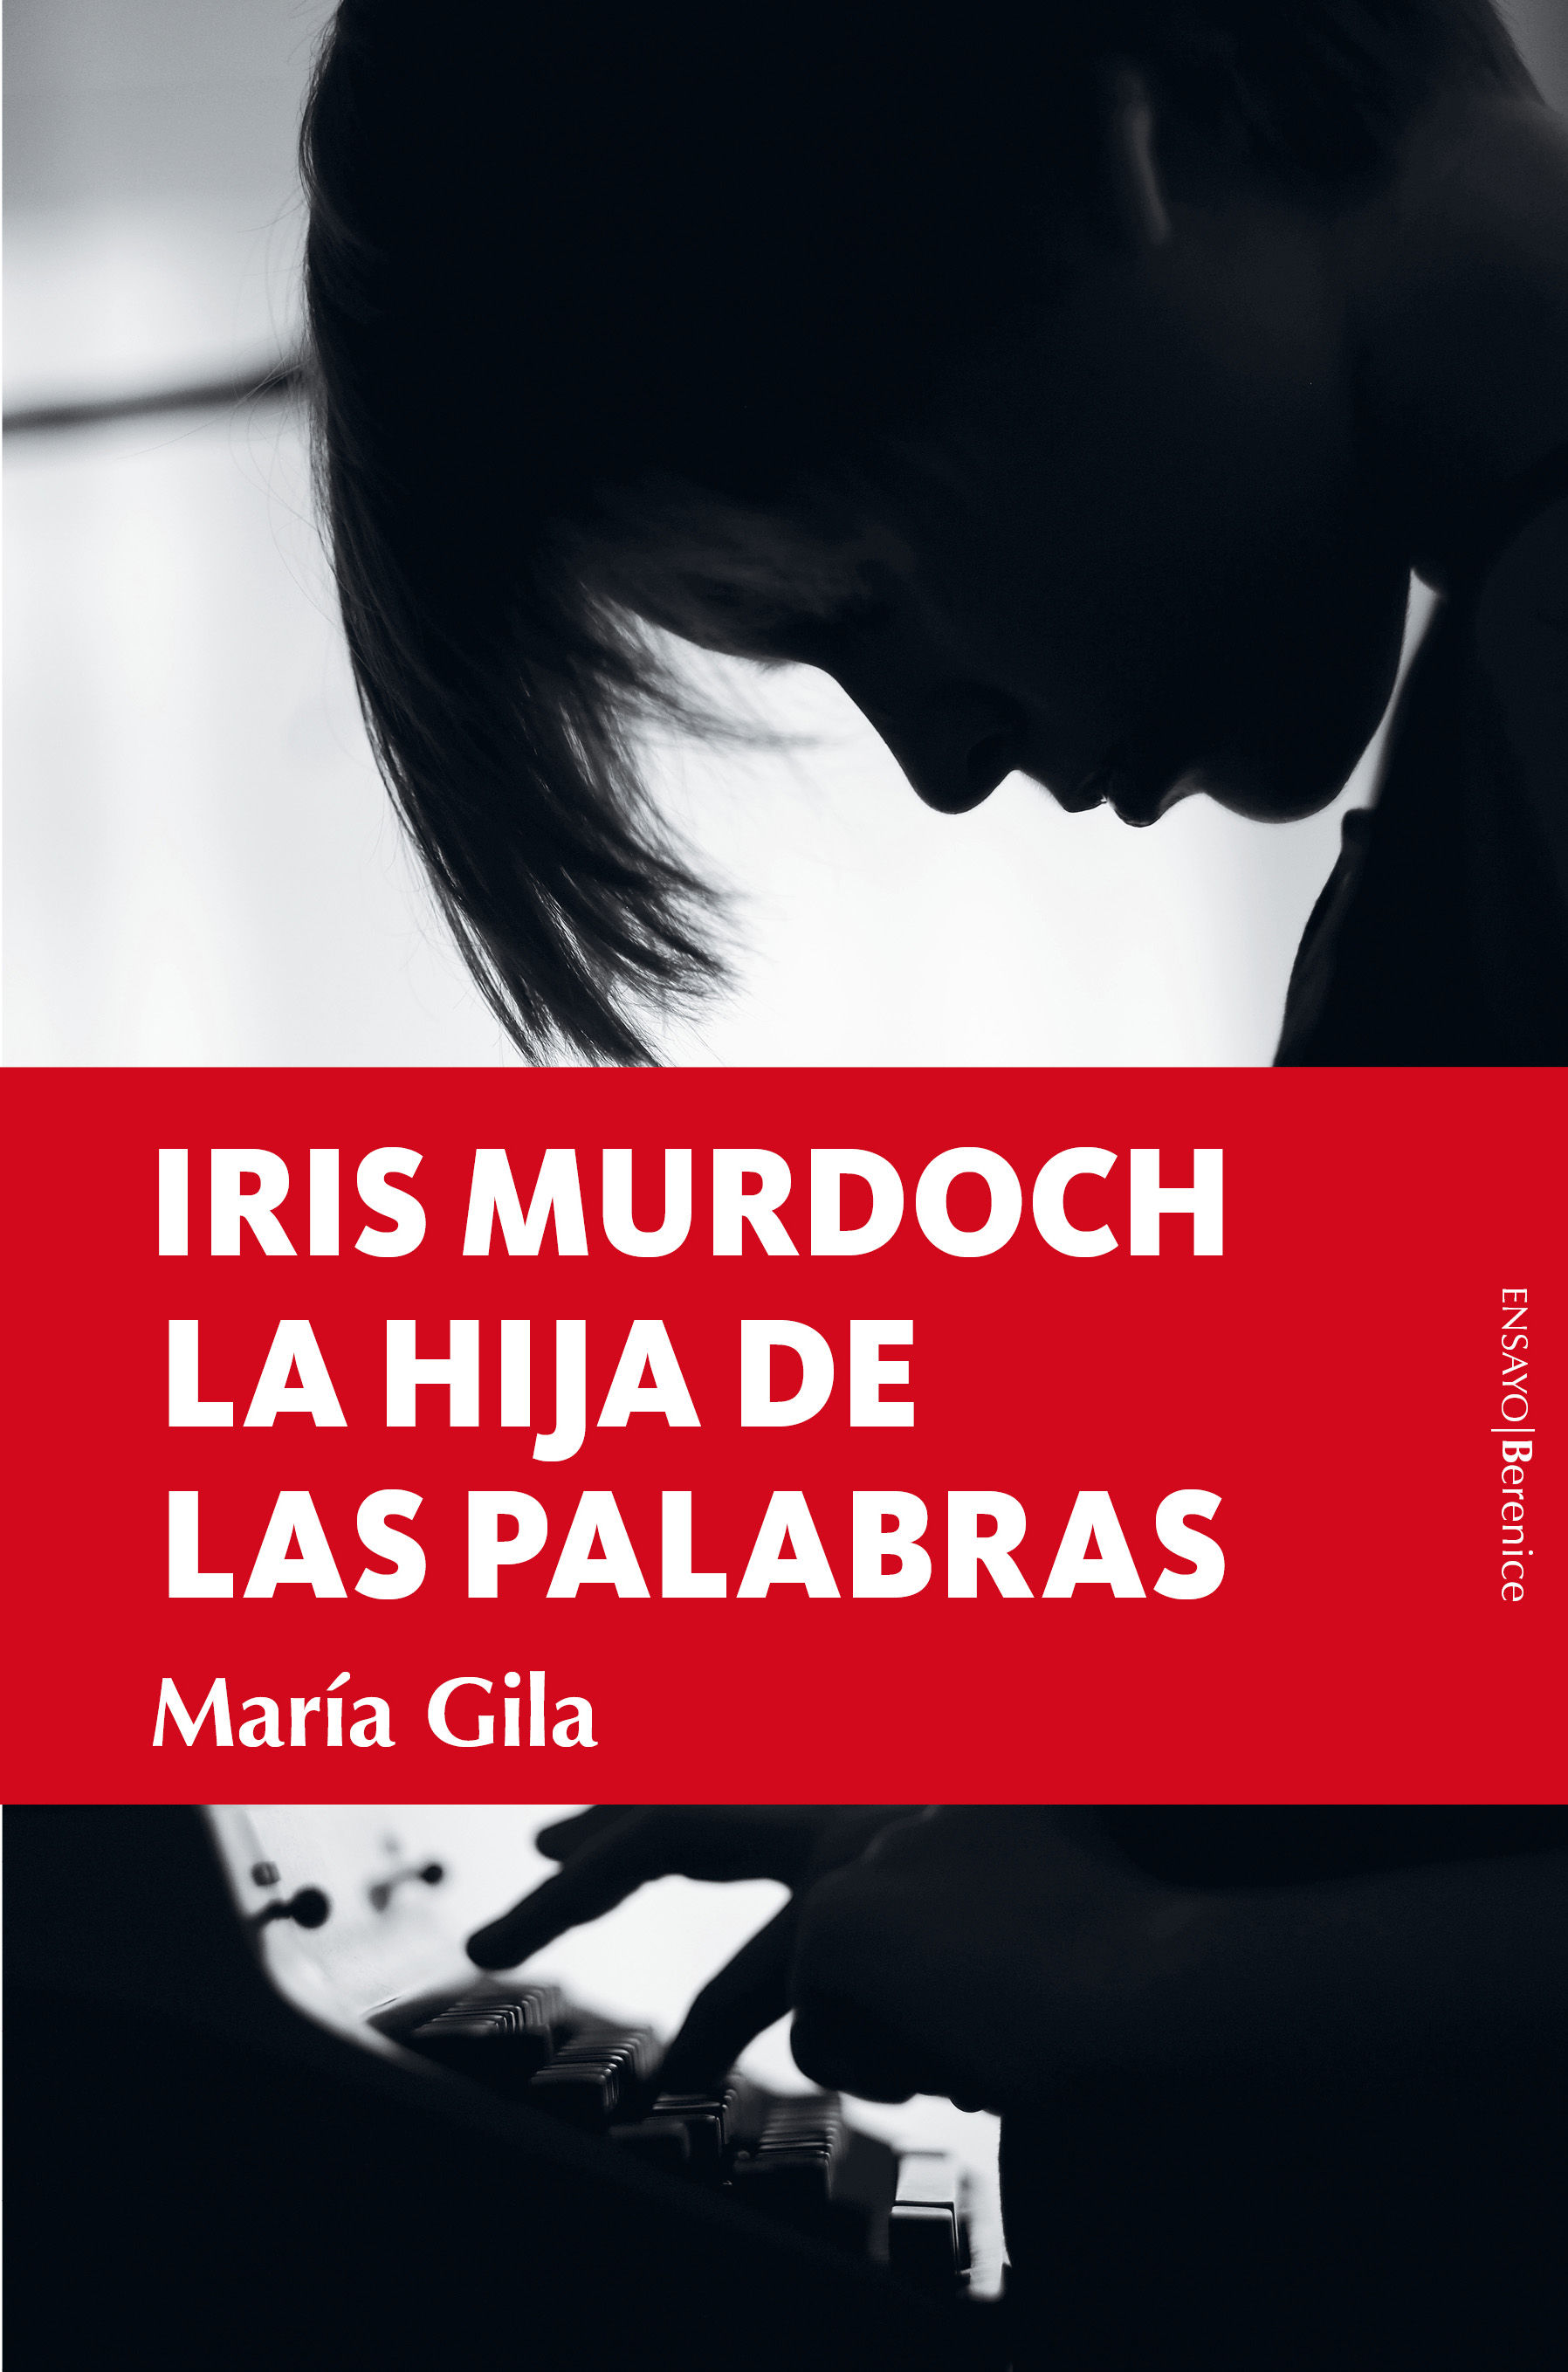 IRIS MURDOCH, LA HIJA DE LAS PALABRAS. 